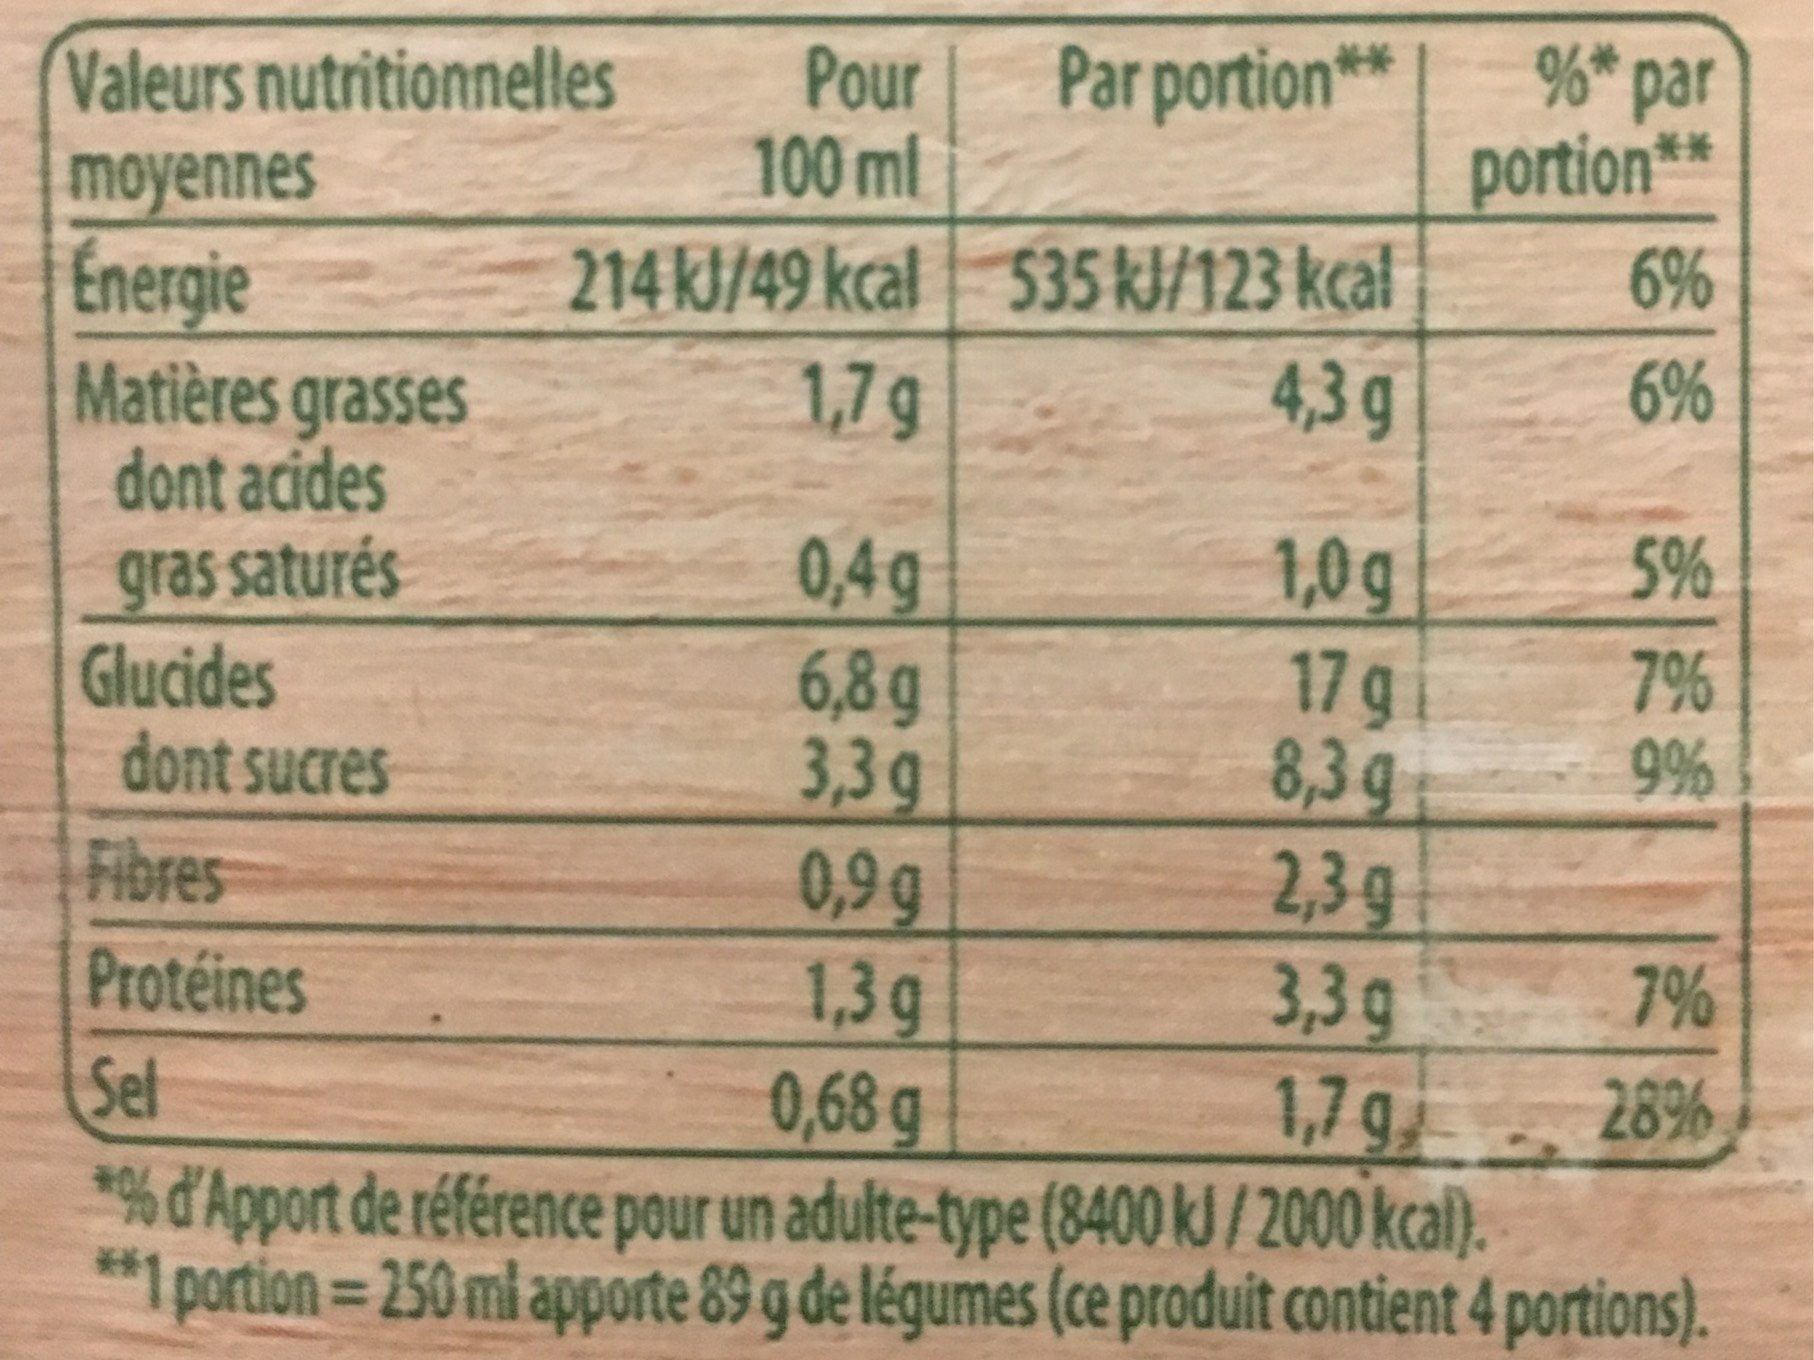 Knr 12leg from frais 2x1l - Nutrition facts - fr